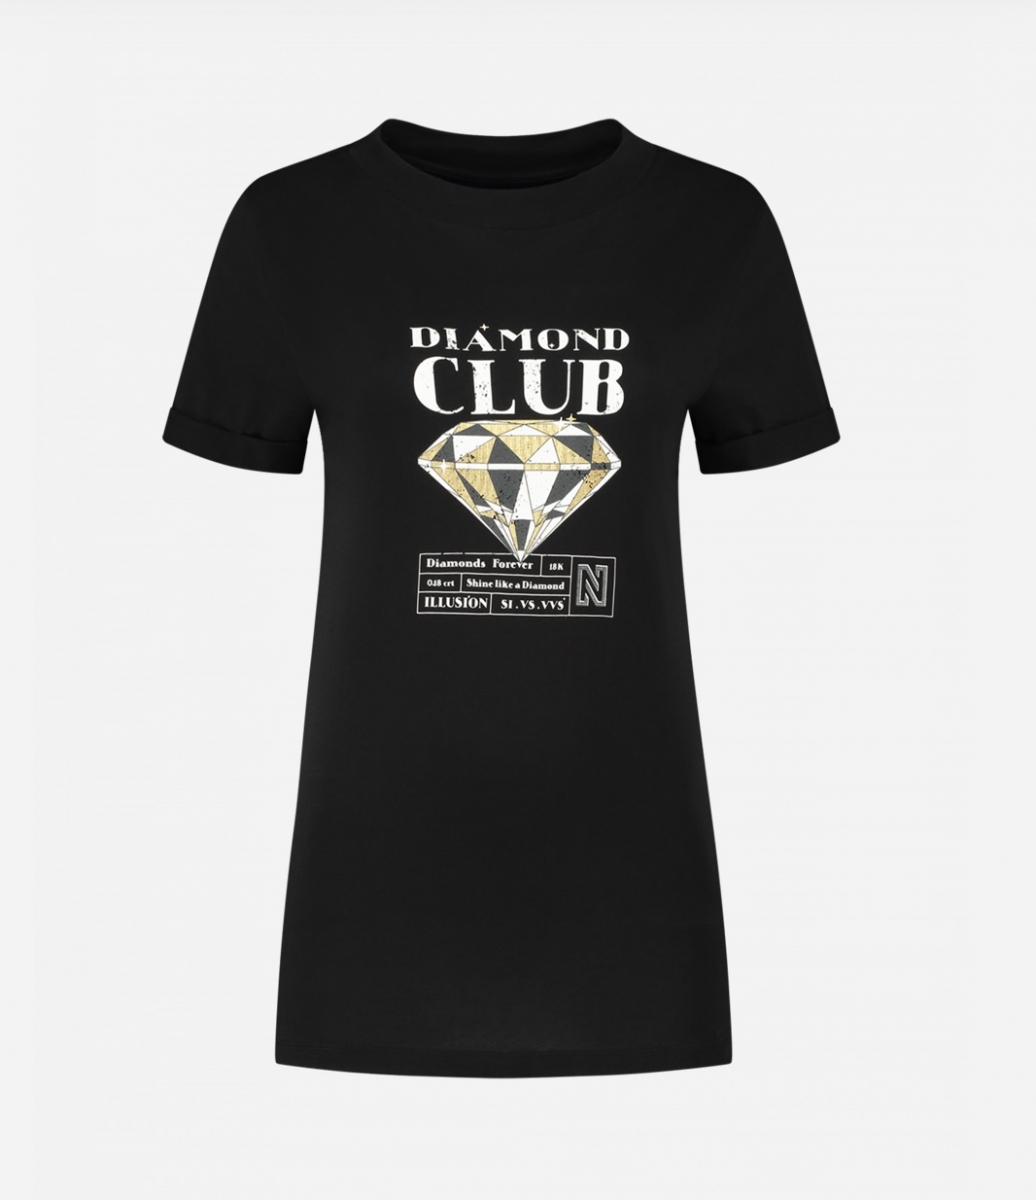 DIAMOND CLUB T-SHIRT